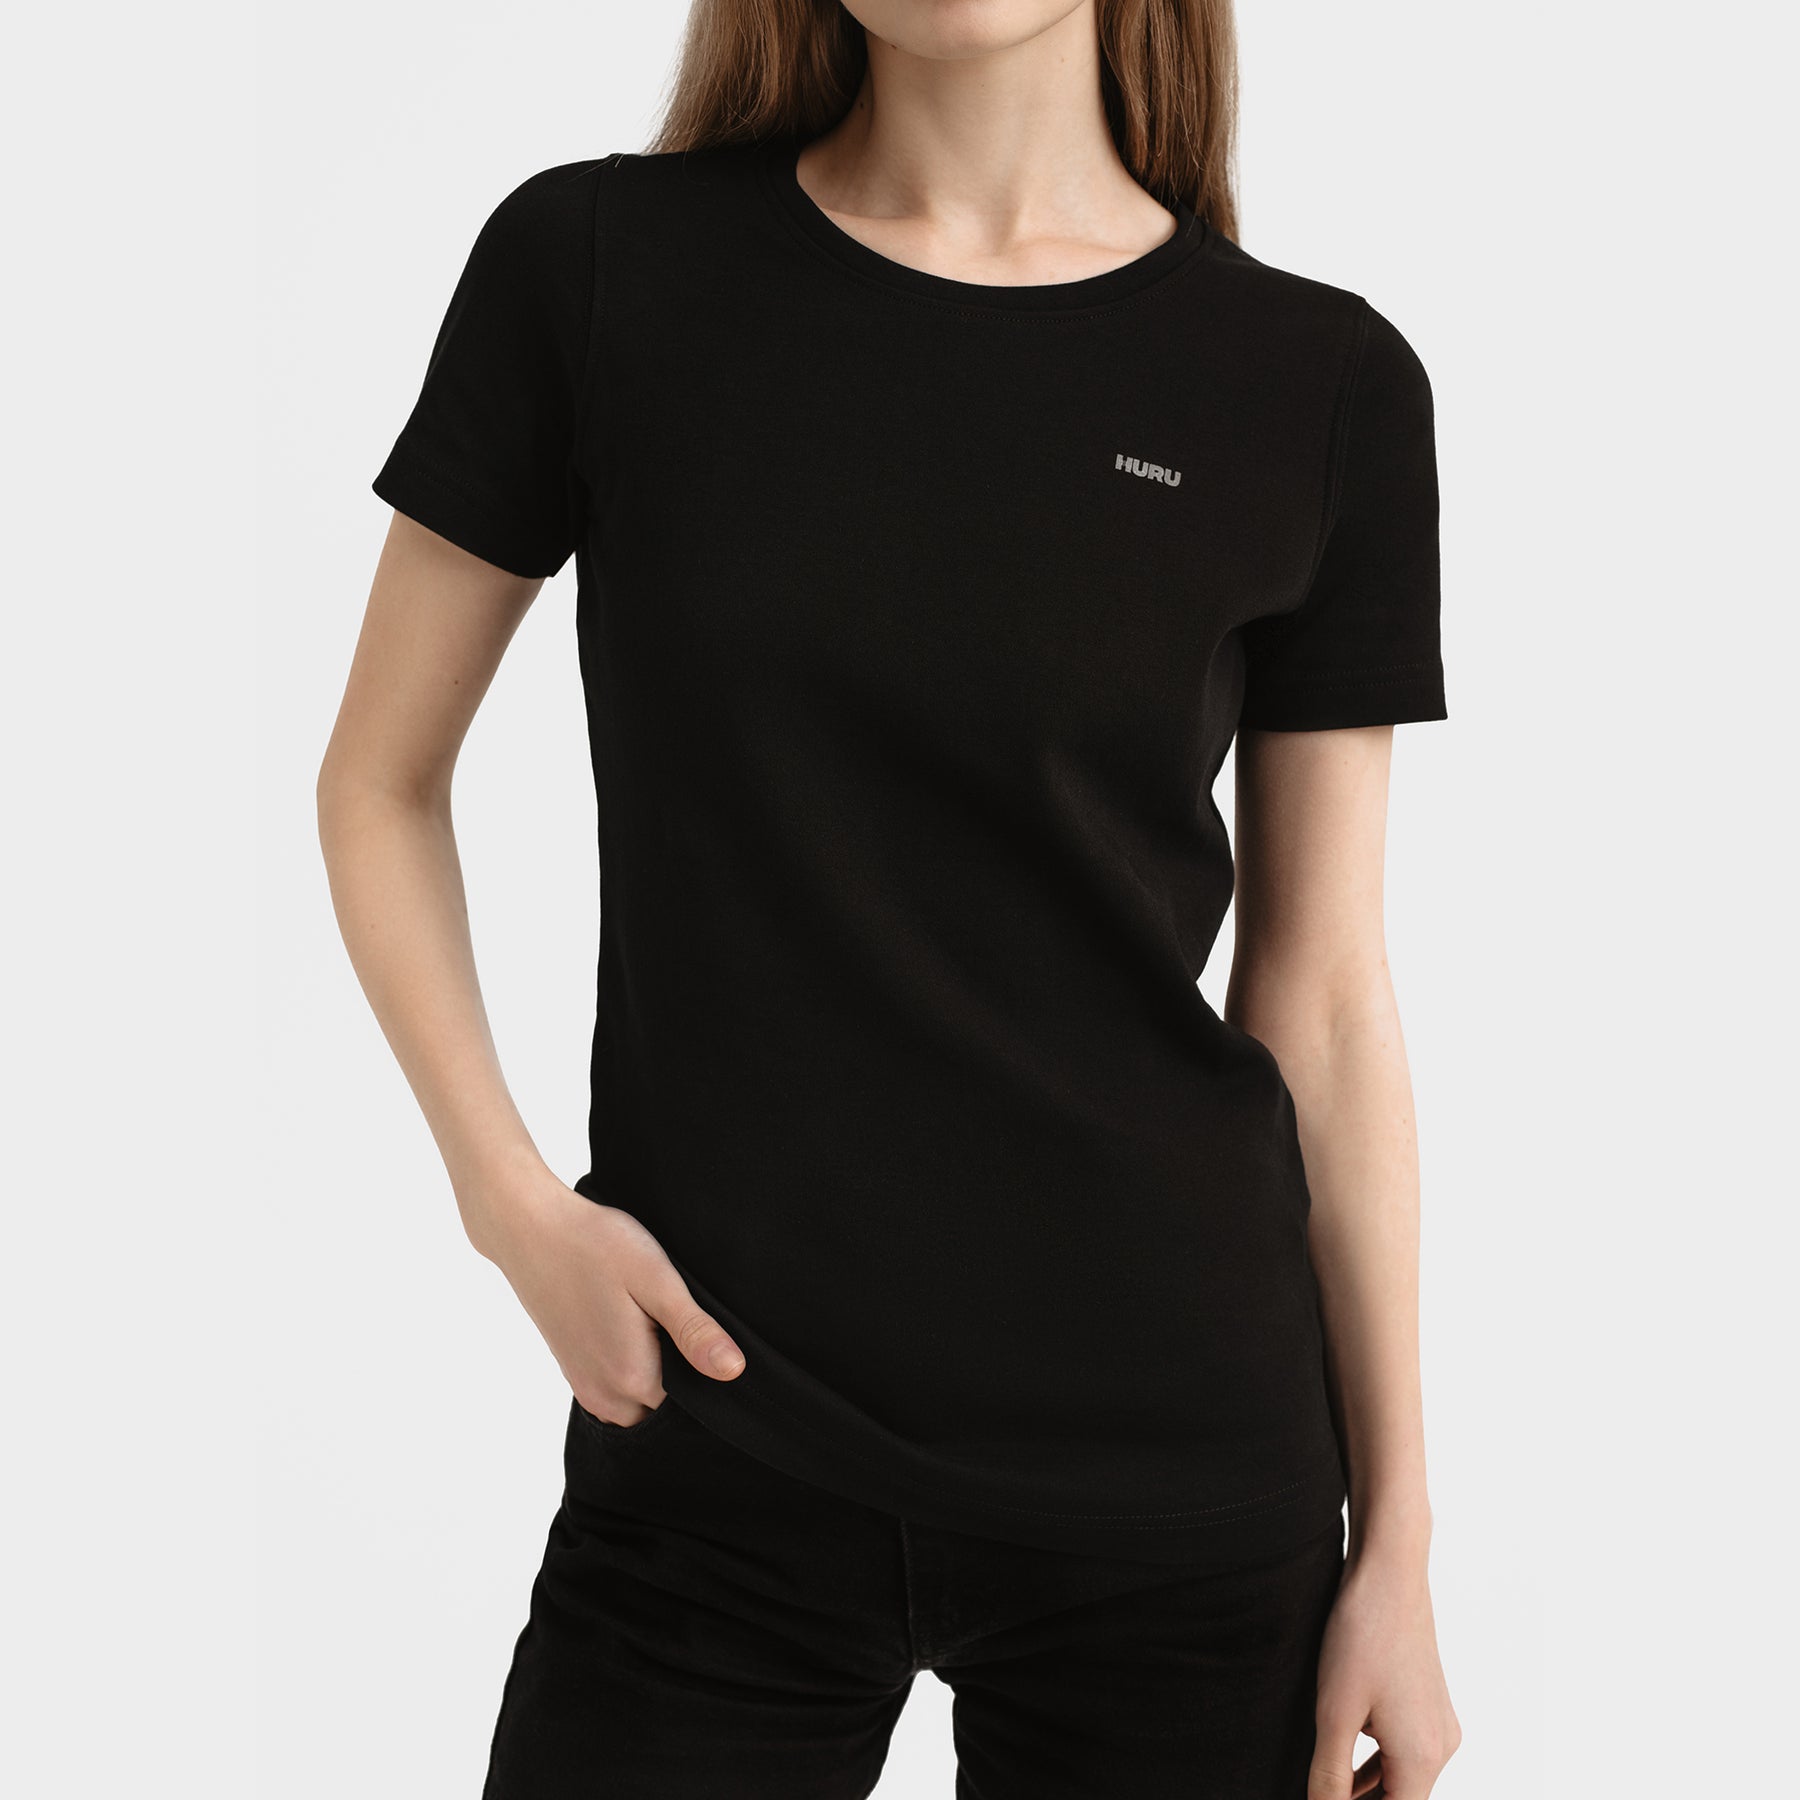 Buy Bodycare Women Round neck Half Sleeve Cotton T-shirt in Black colour -  1pcs - TS21-BLK online